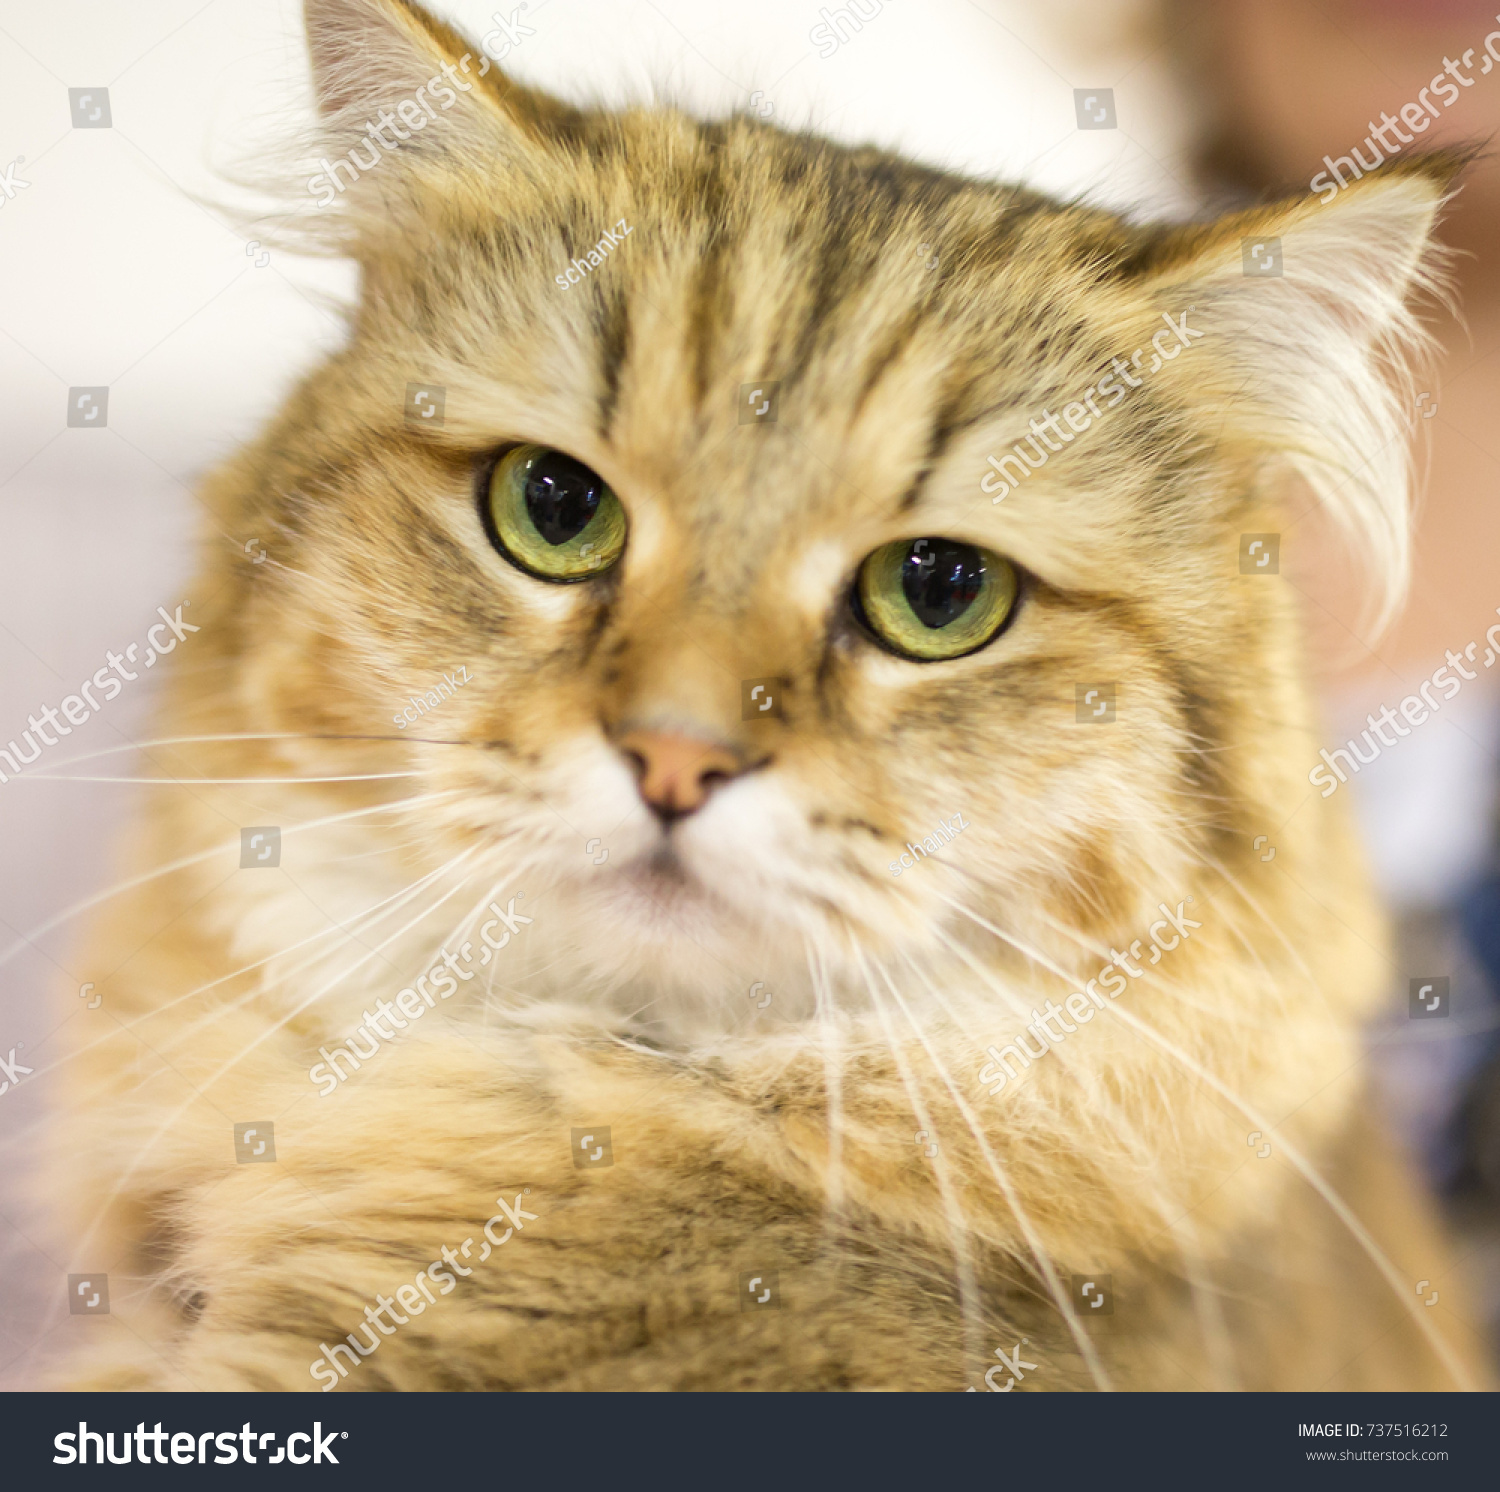 Portrait Thoroughbred Cat Exhibition Stock Photo 737516212 ...